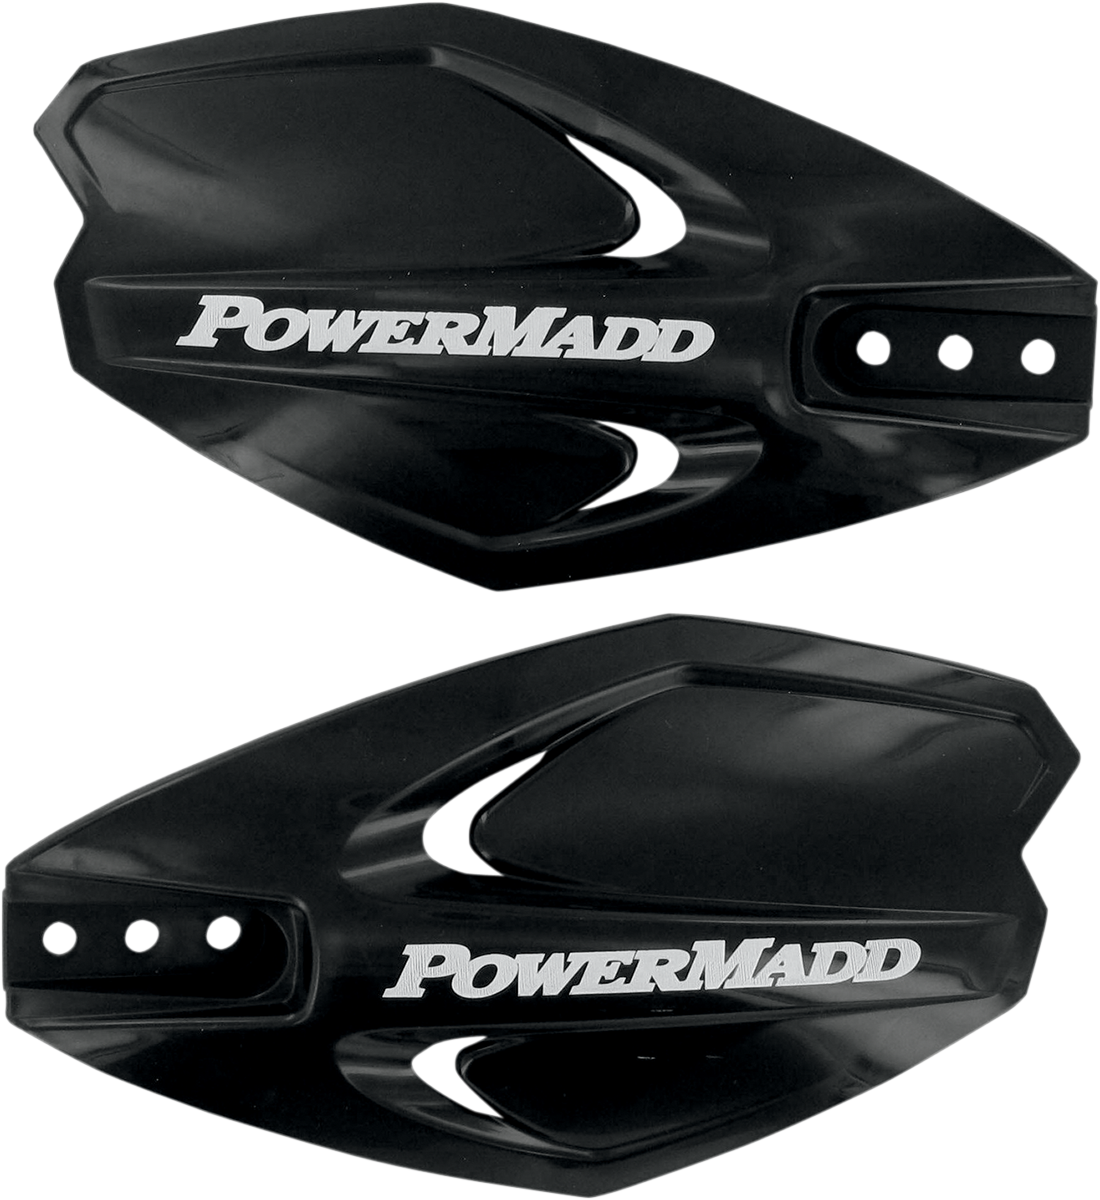 POWERMADD/COBRA POWERX HANDGUARDS AND MOUNT KITS HAND GUARD-MX GUARD BLACK